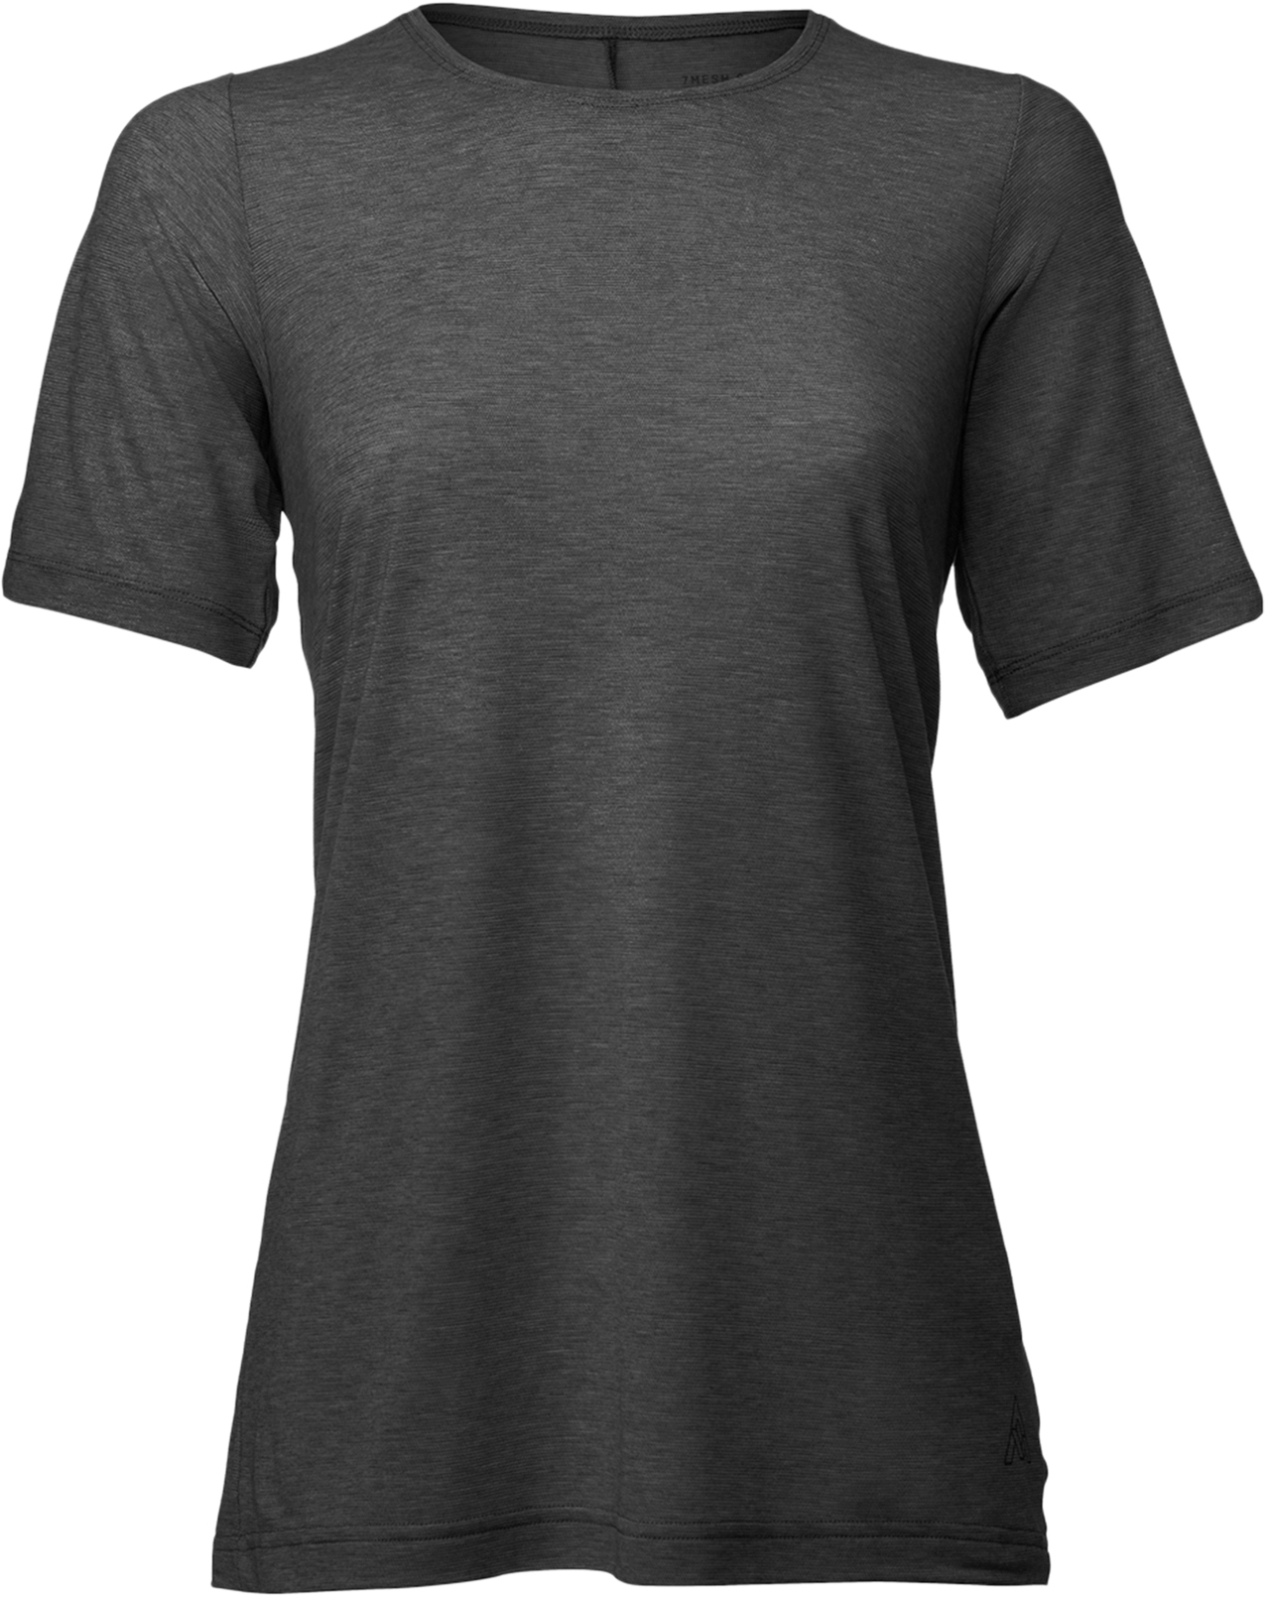 E-shop 7Mesh Elevate T-Shirt SS Women's - Black S